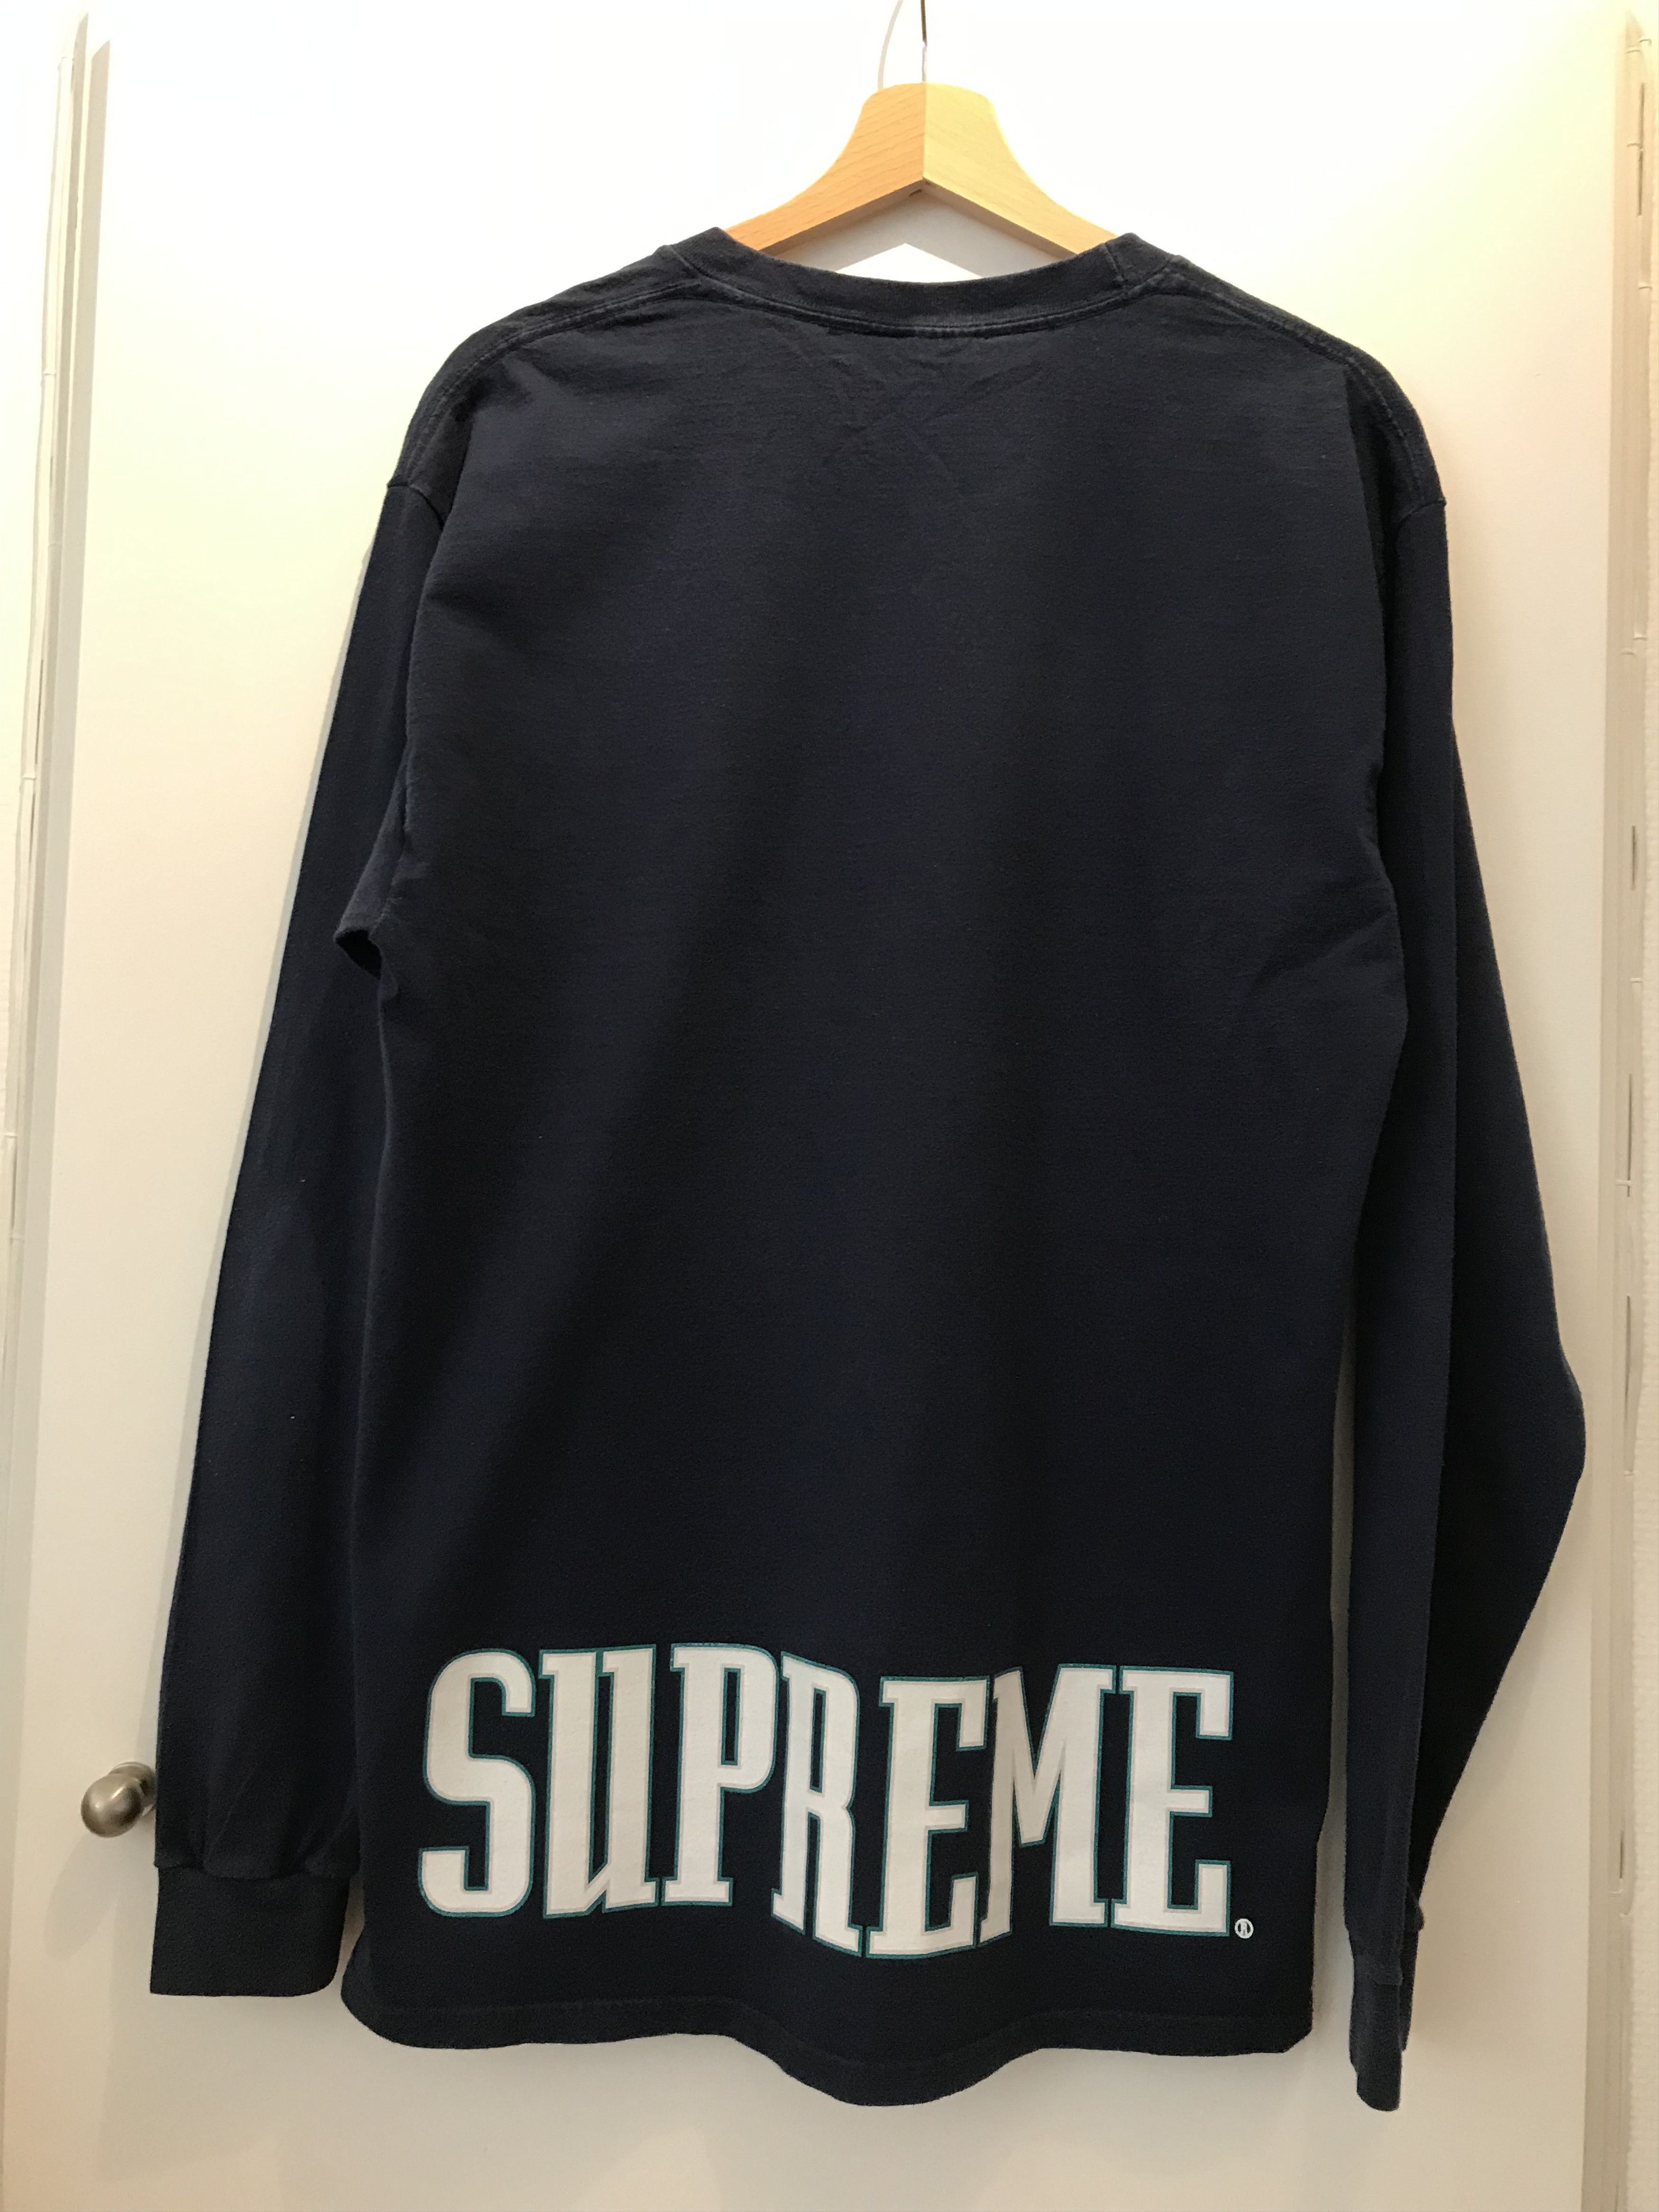 Supreme Supreme Suicidal Long Sleeve T-shirt | Grailed